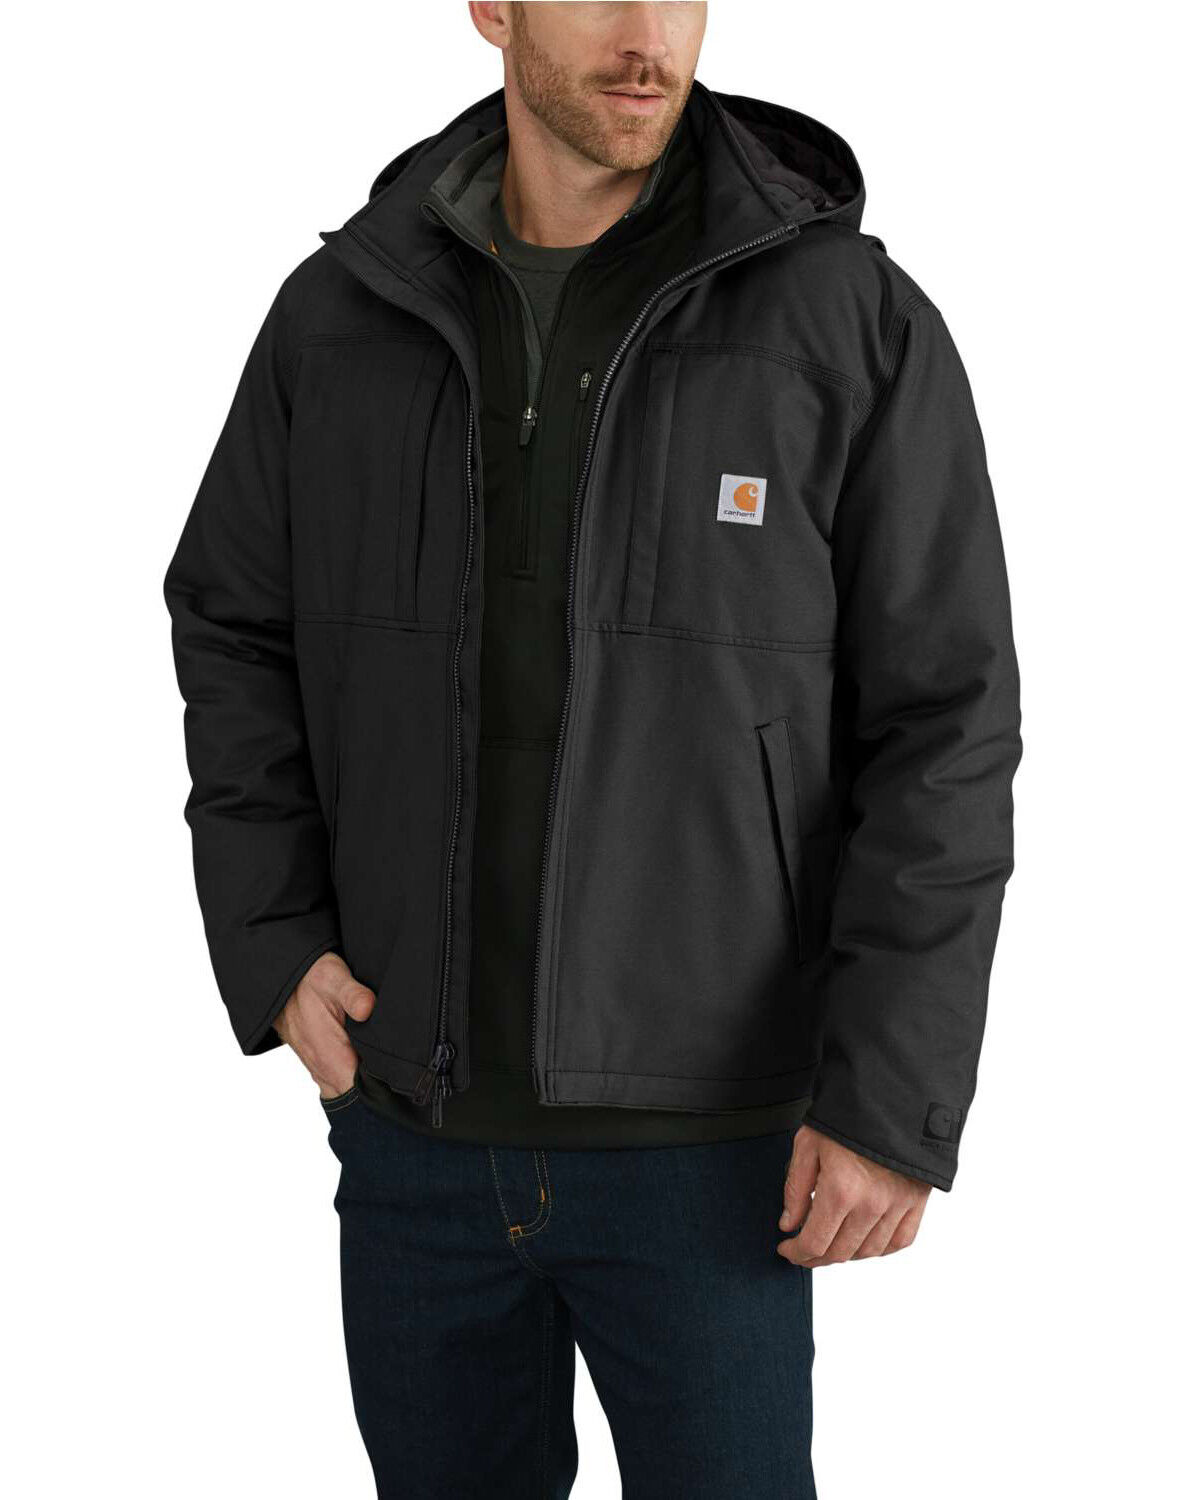 HARD LAND Mens Waterproof Winter Jacket Insulated Puffer Jacket Windproof Work Coat